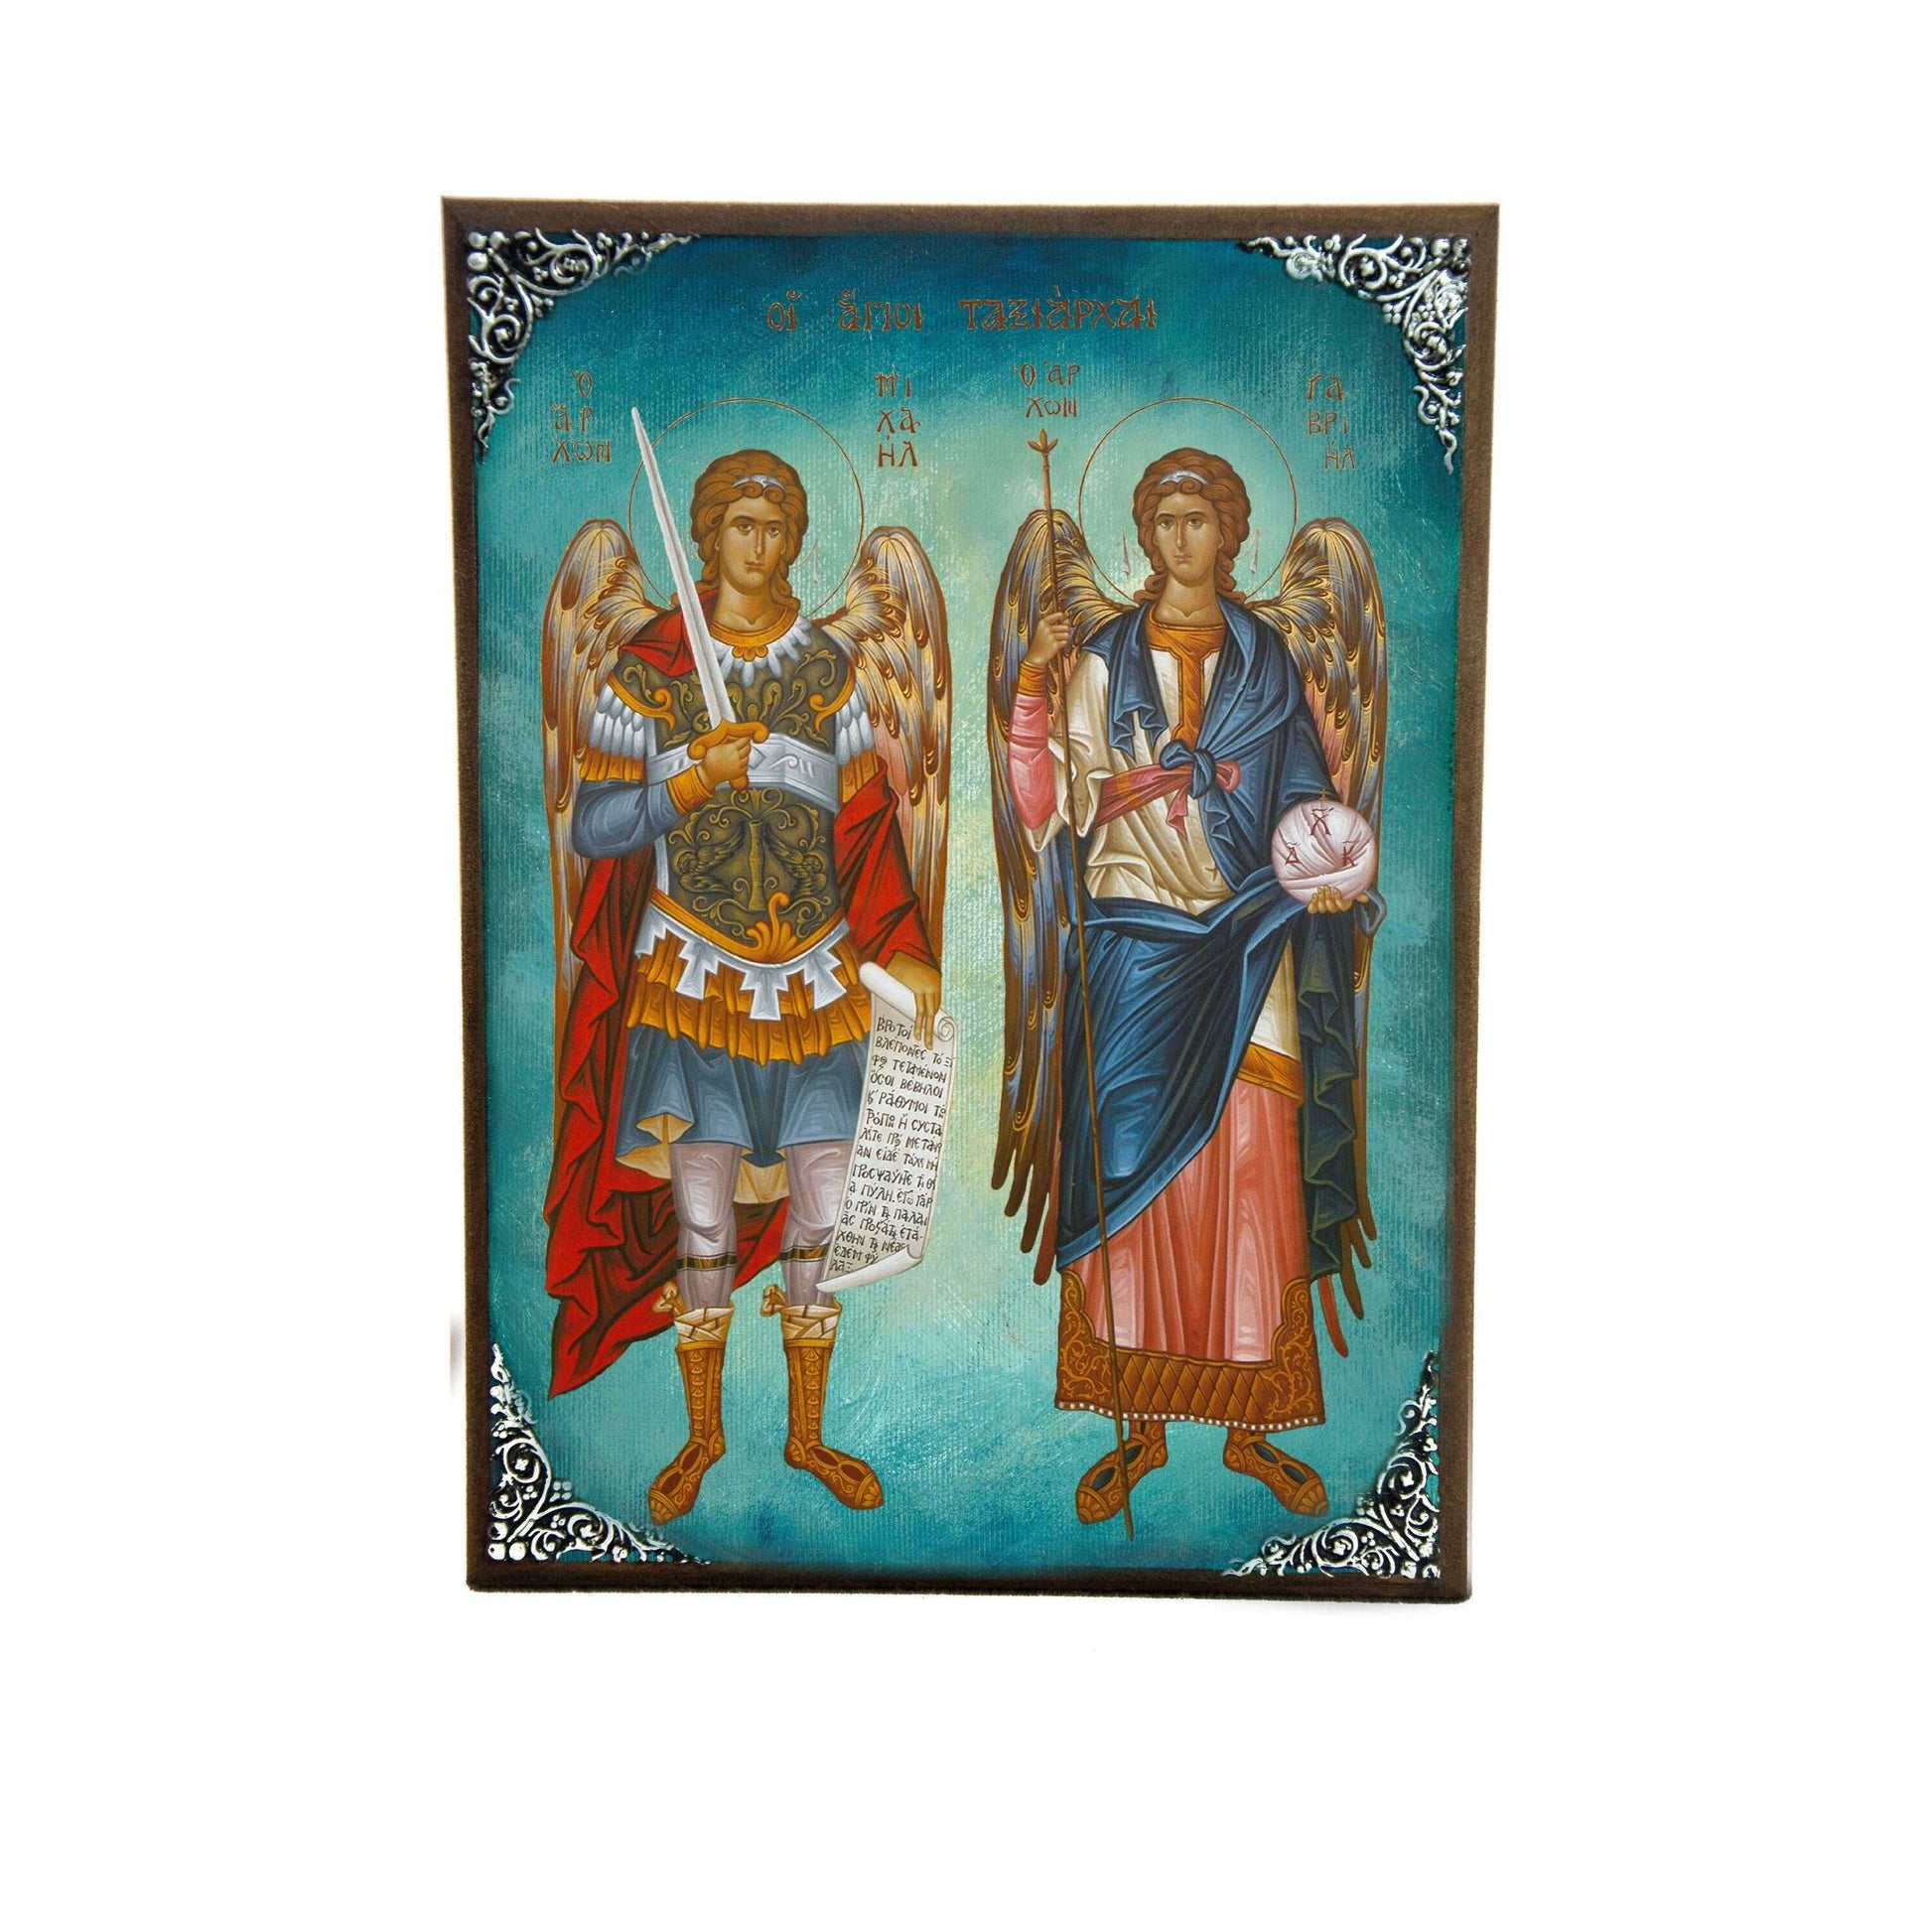 Archangel Michael & Archangel Gabriel icon, Taksiarxes Byzantine art wall hanging Greek Catholic Orthodox icon wood plaque religious gift TheHolyArt